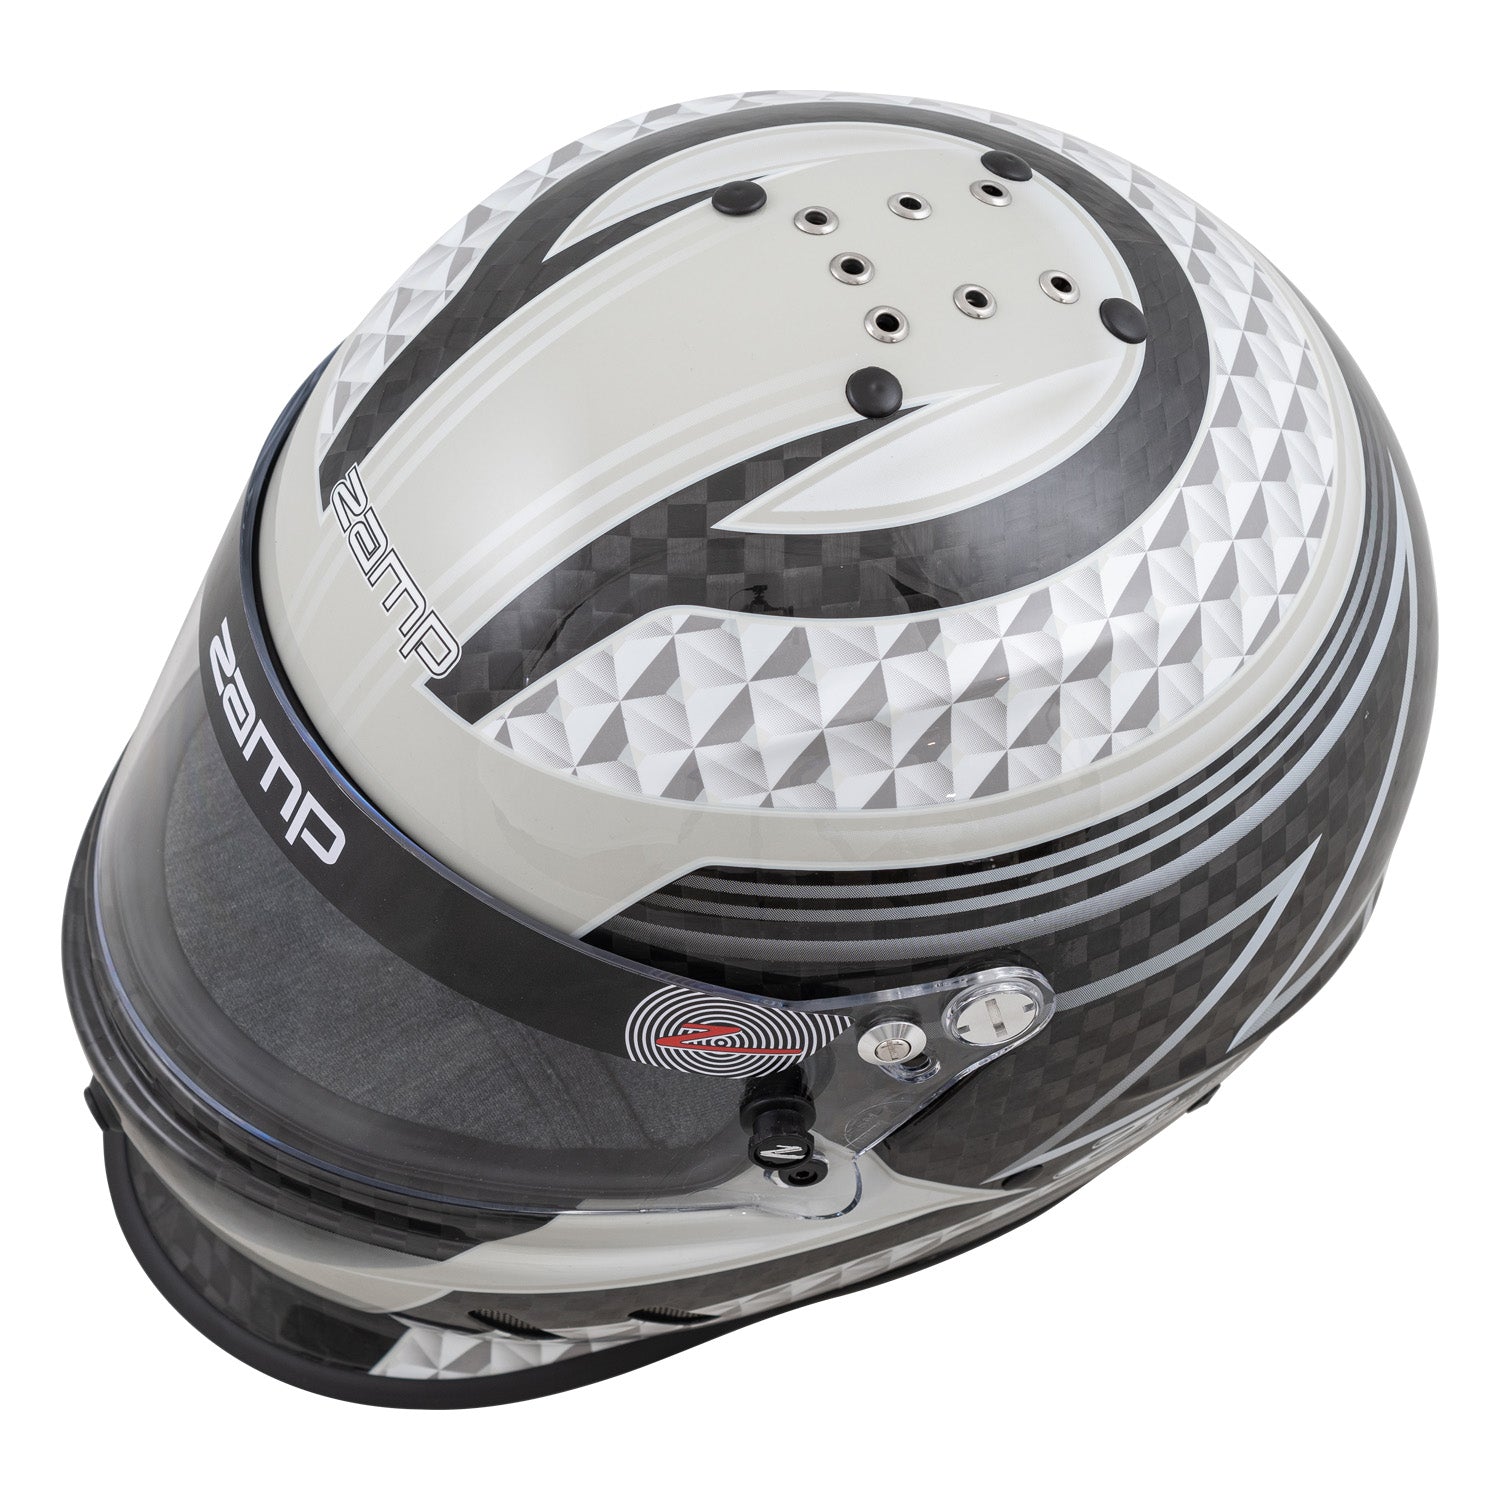 Zamp RZ-65D Graphic Helmet, Snell SA-2020